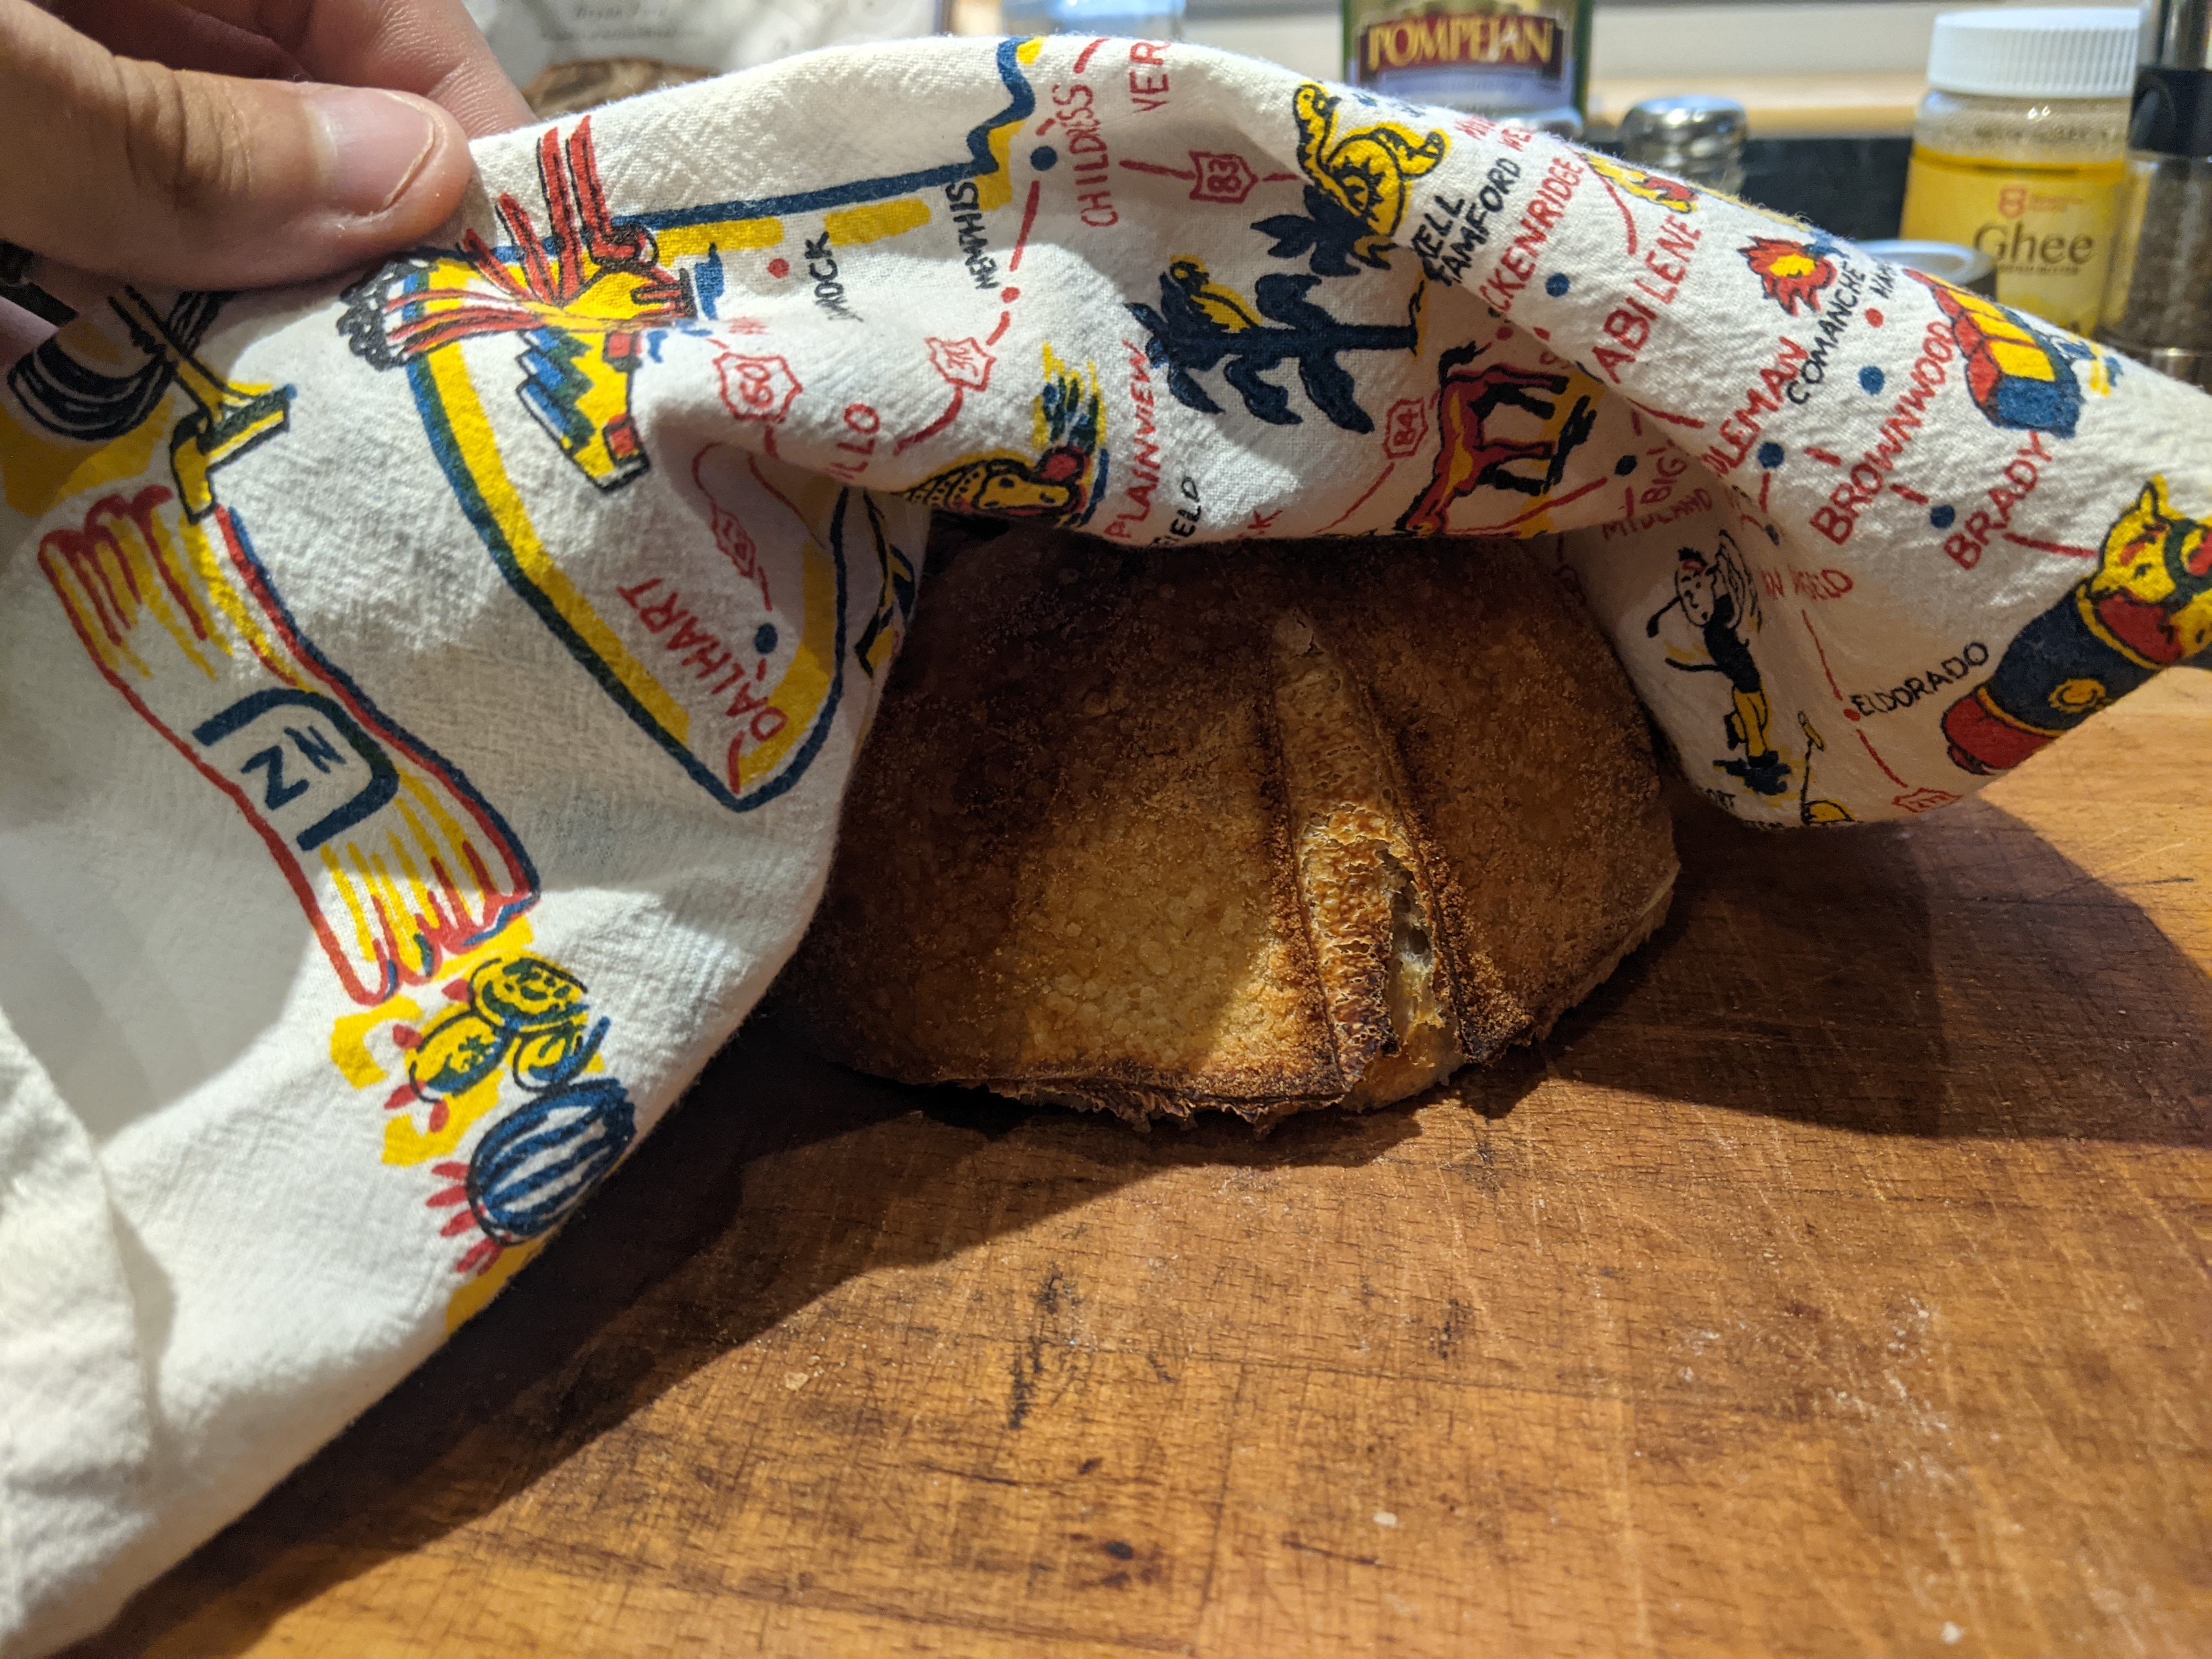 When should you throw out sourdough bread?